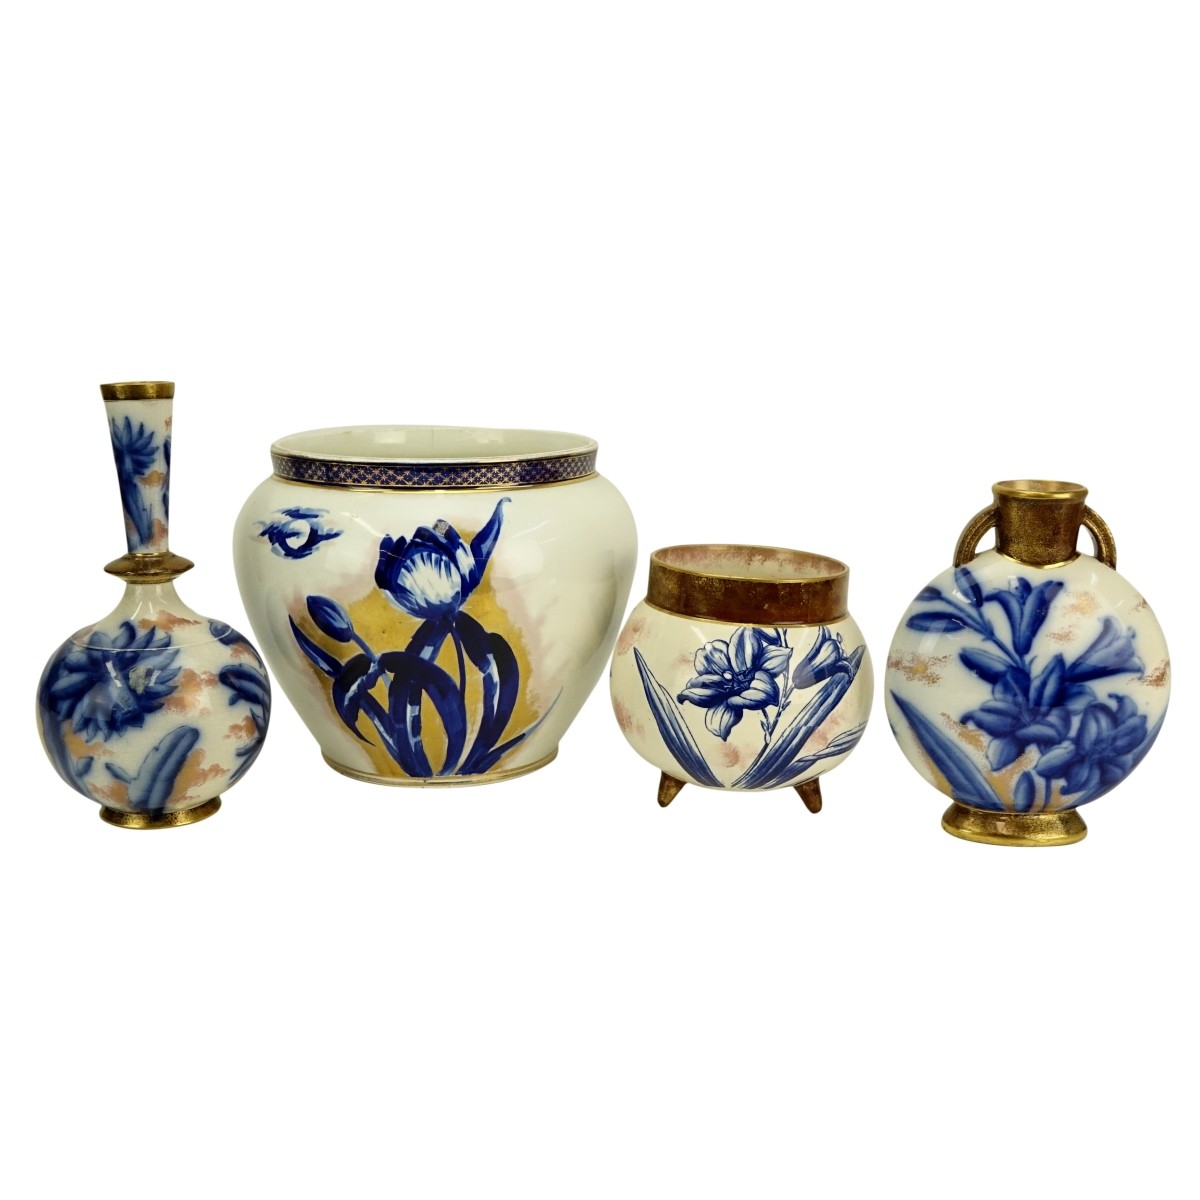 Four (4) English Pottery Vases